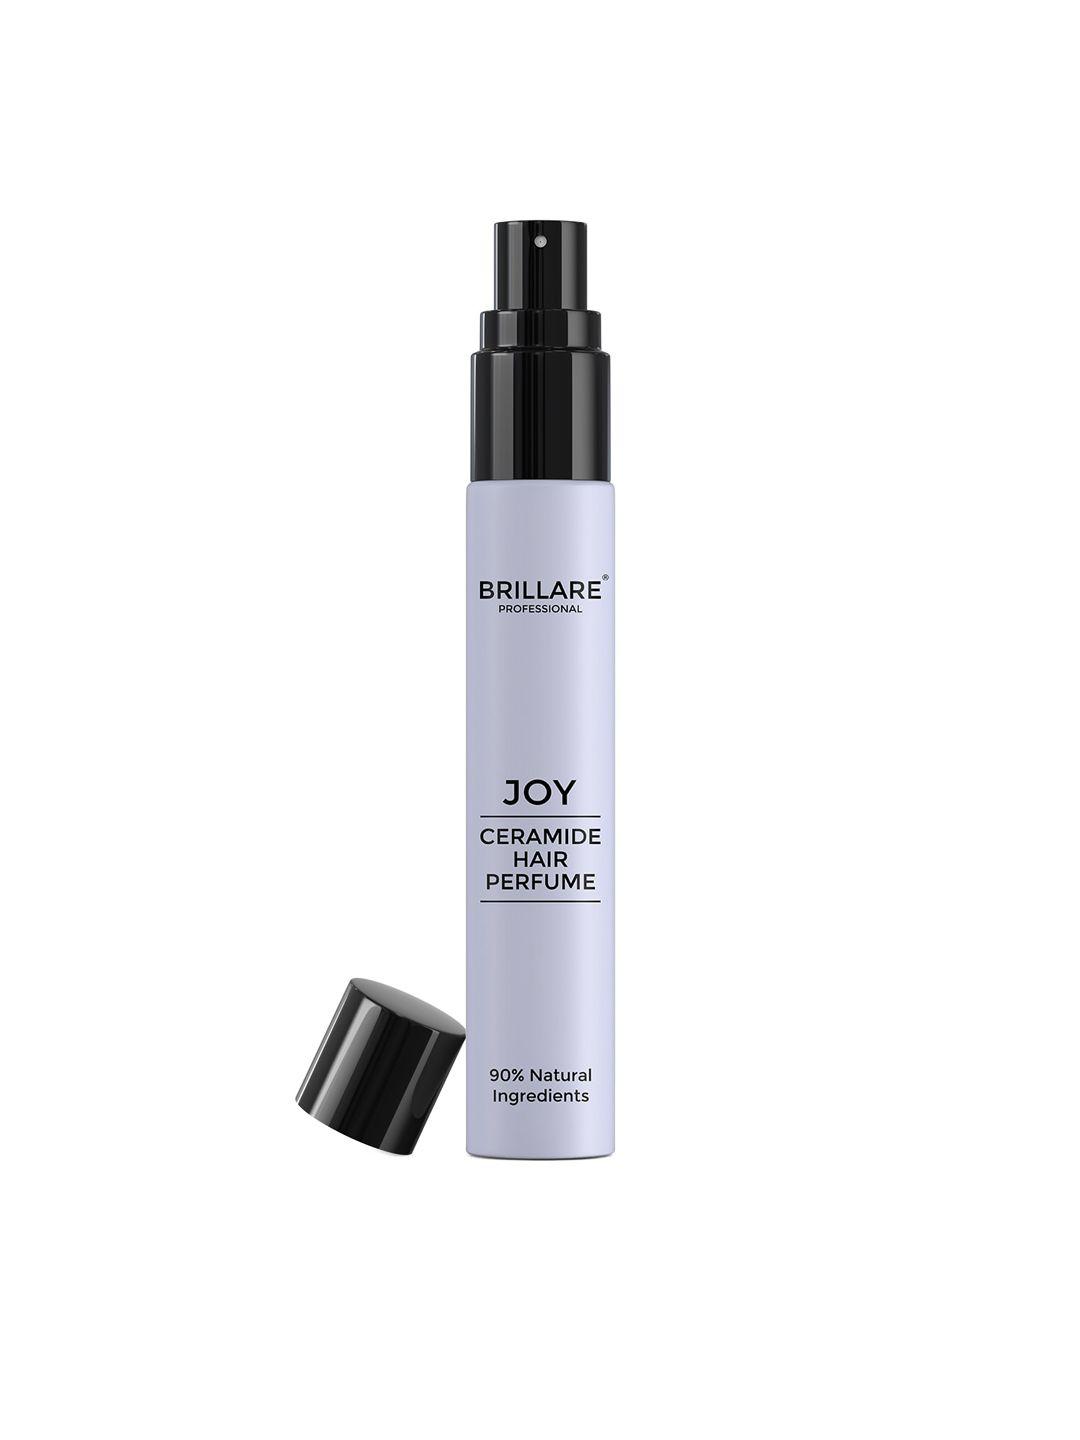 brillare joy ceramide hair perfume spray - 10ml